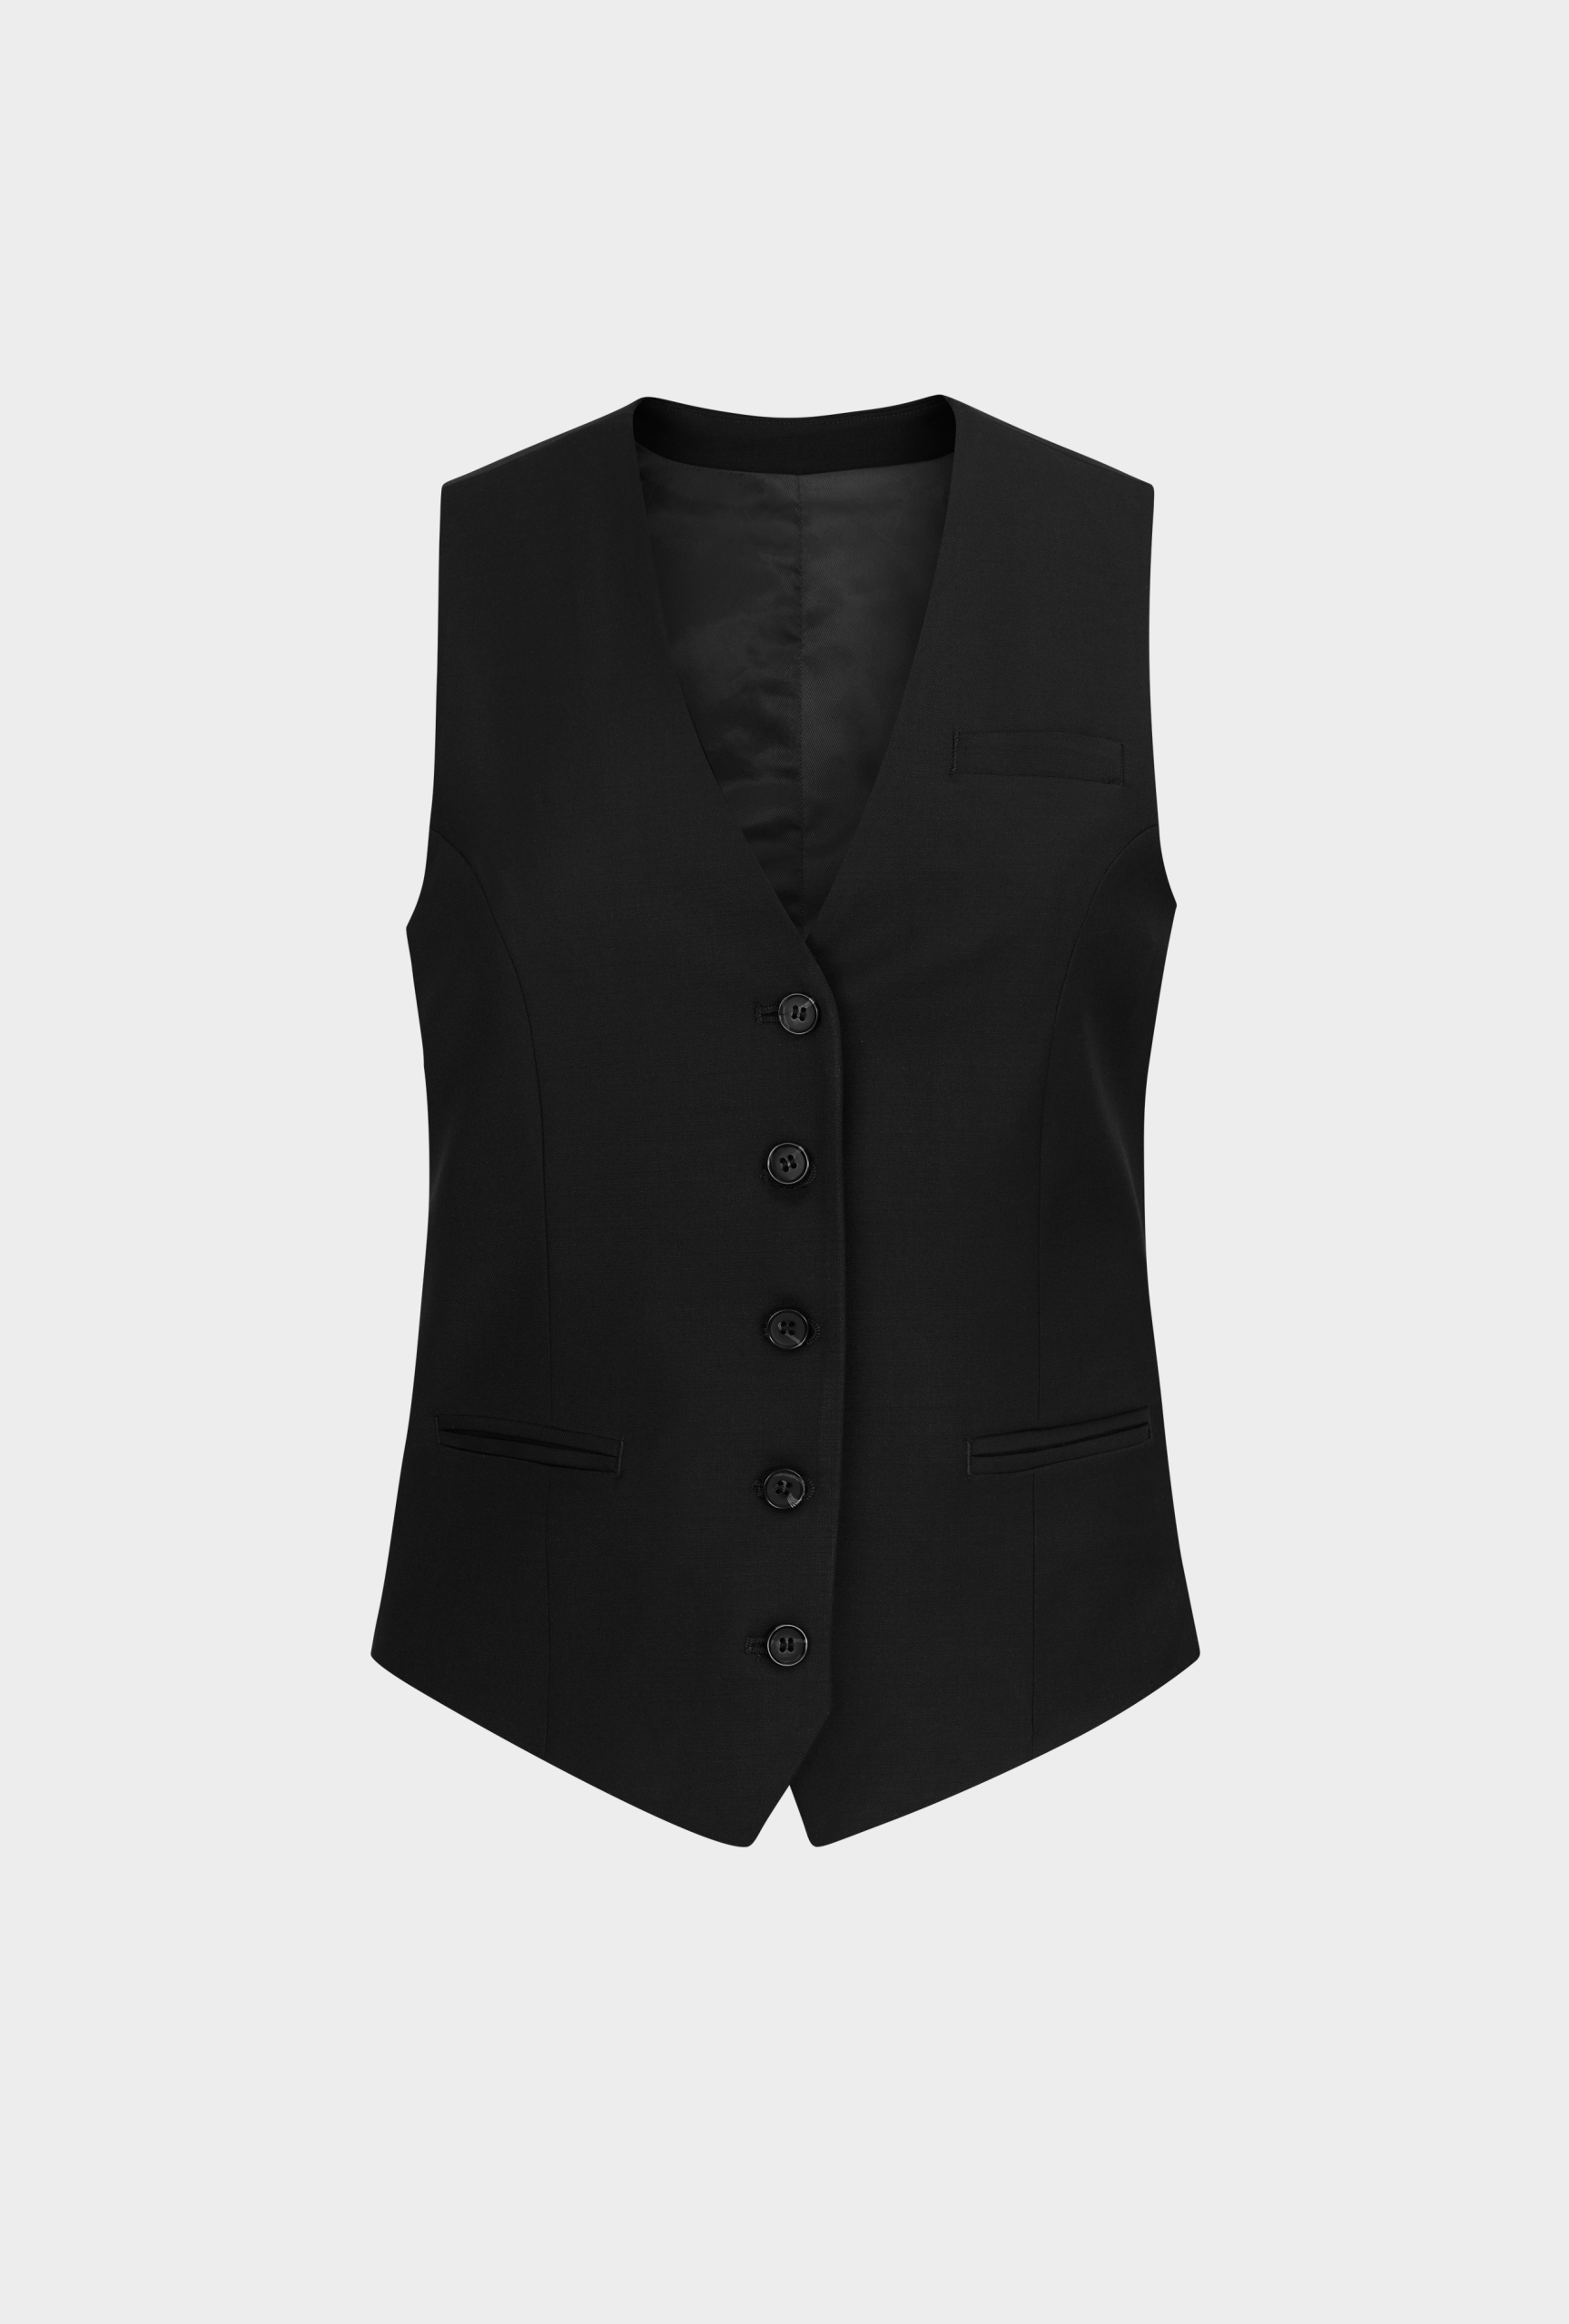 Ladies waistcoat Edit | Ted Bernhardtz – At Work collection shop